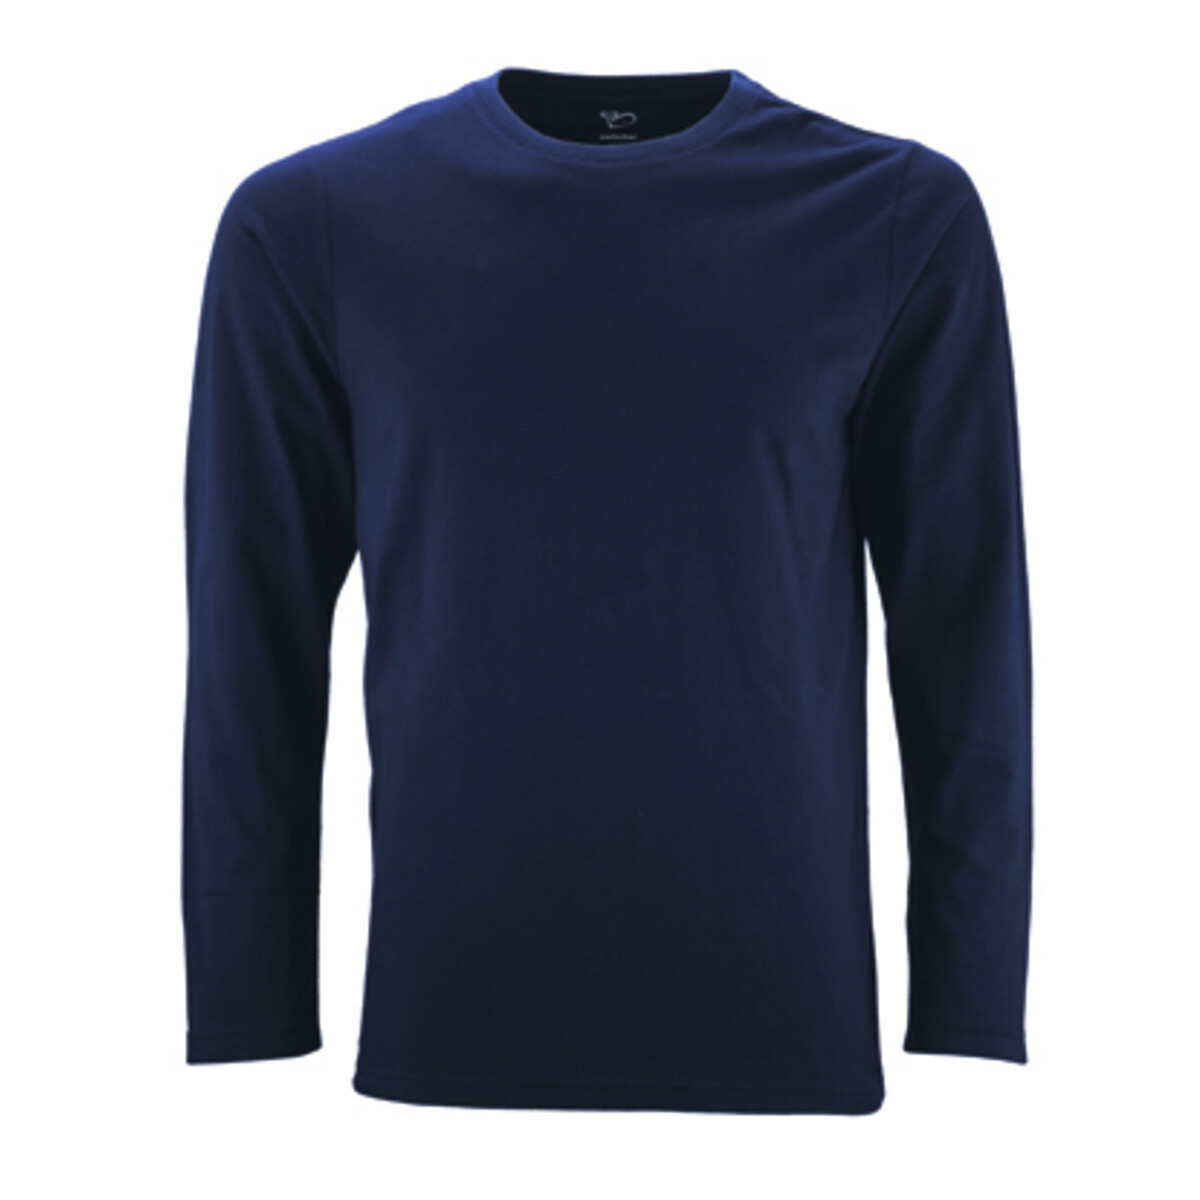 Herren Loic Recycled Baumwolle-Polyester Langarm-T-Shirt, Farbe: Marine 20